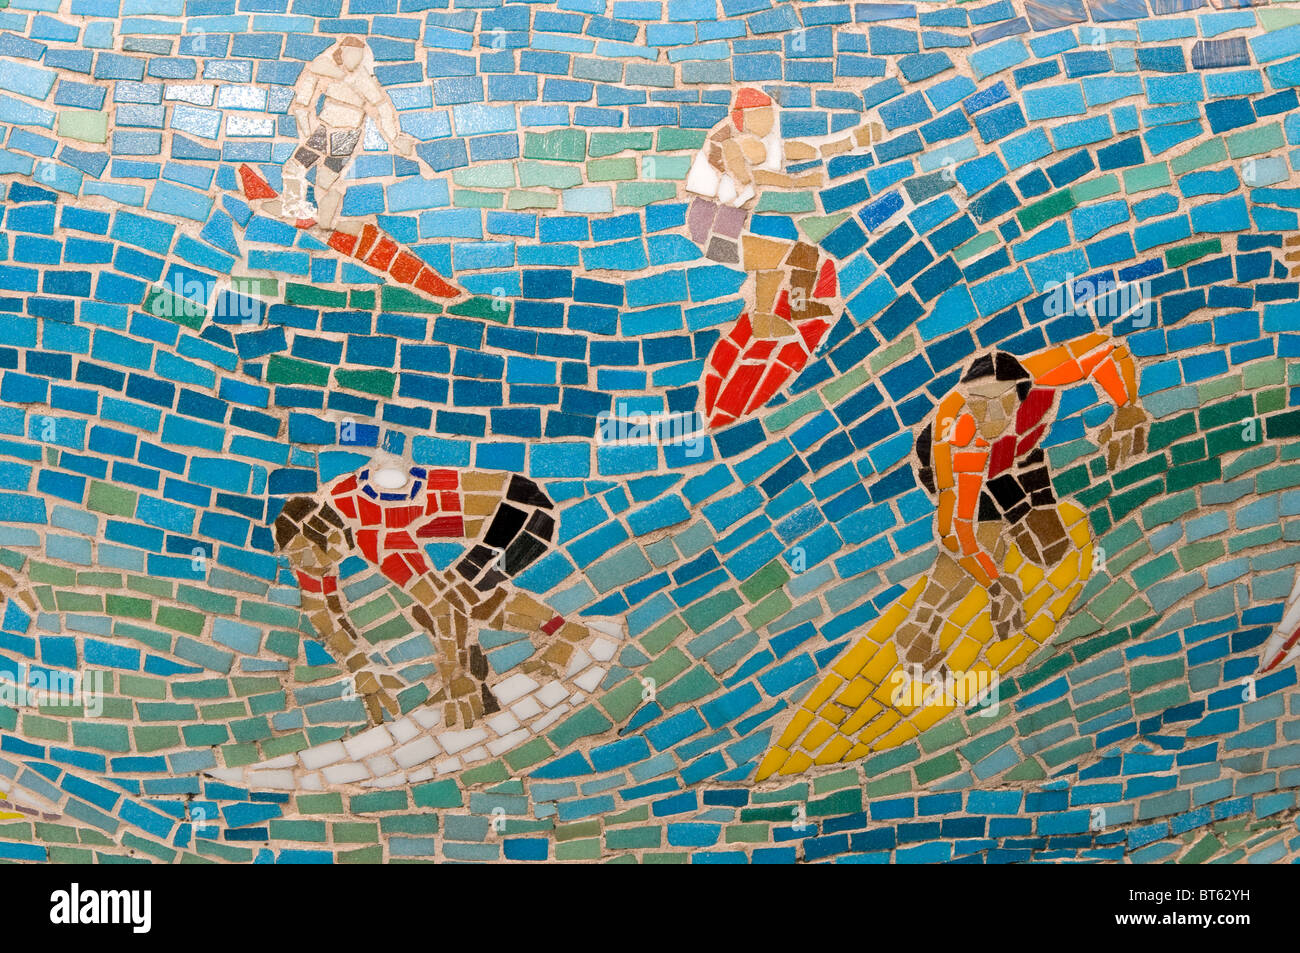 Mosaik Surfer Fliesen Keramik-Kunst Welle Stand-up Stand Australien Südhalbkugel Aussie Bondi beach Süd-Ost-Australien neue s Stockfoto